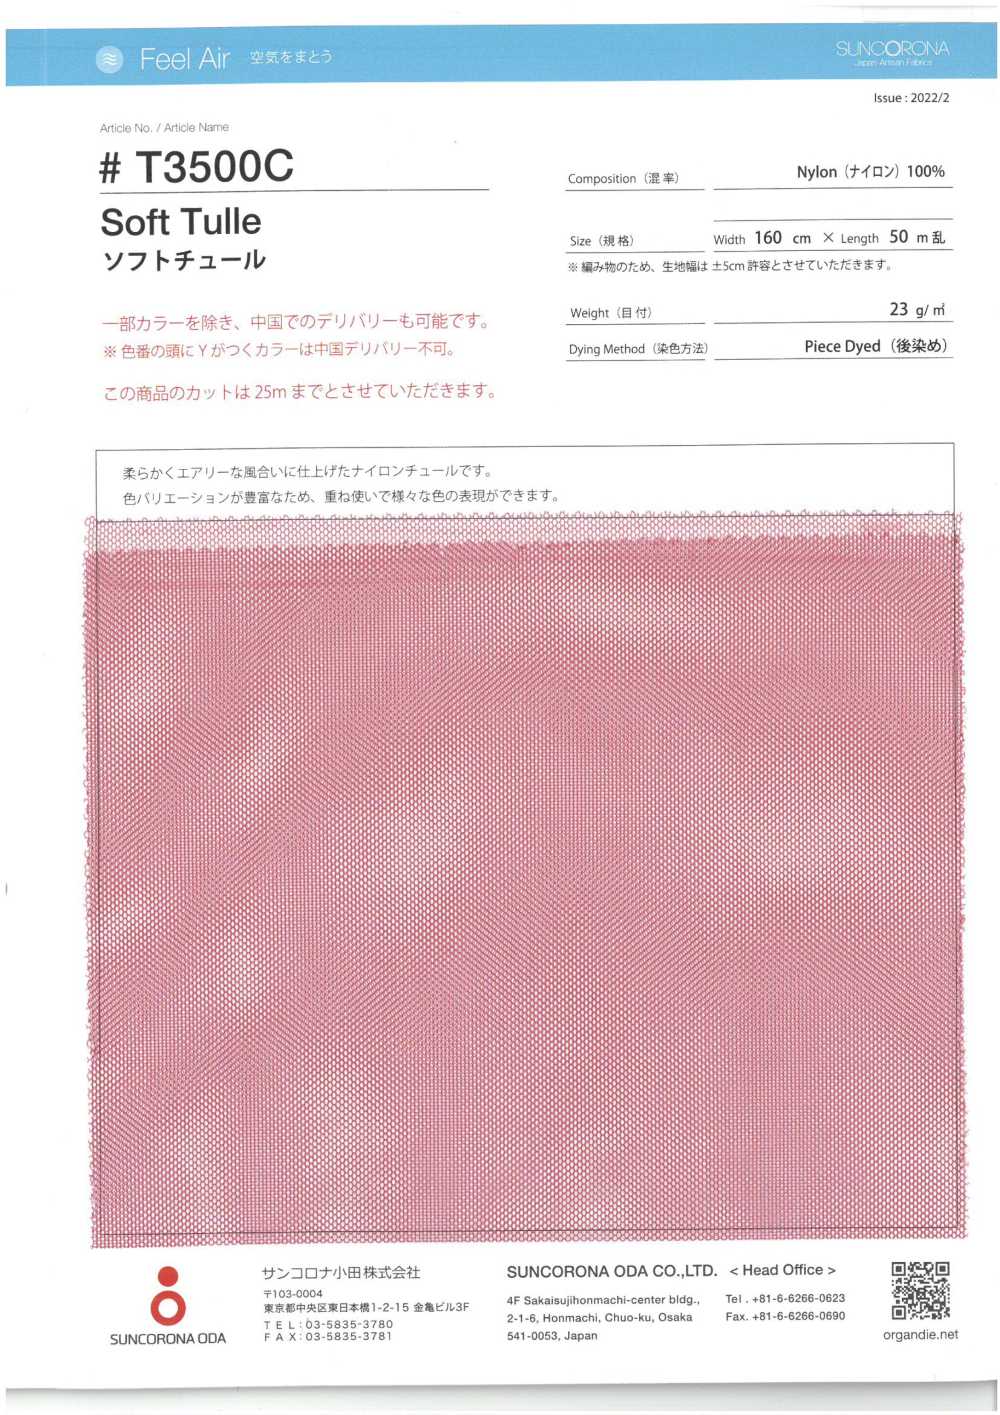 T3500C Weicher Tüll[Textilgewebe] Suncorona Oda